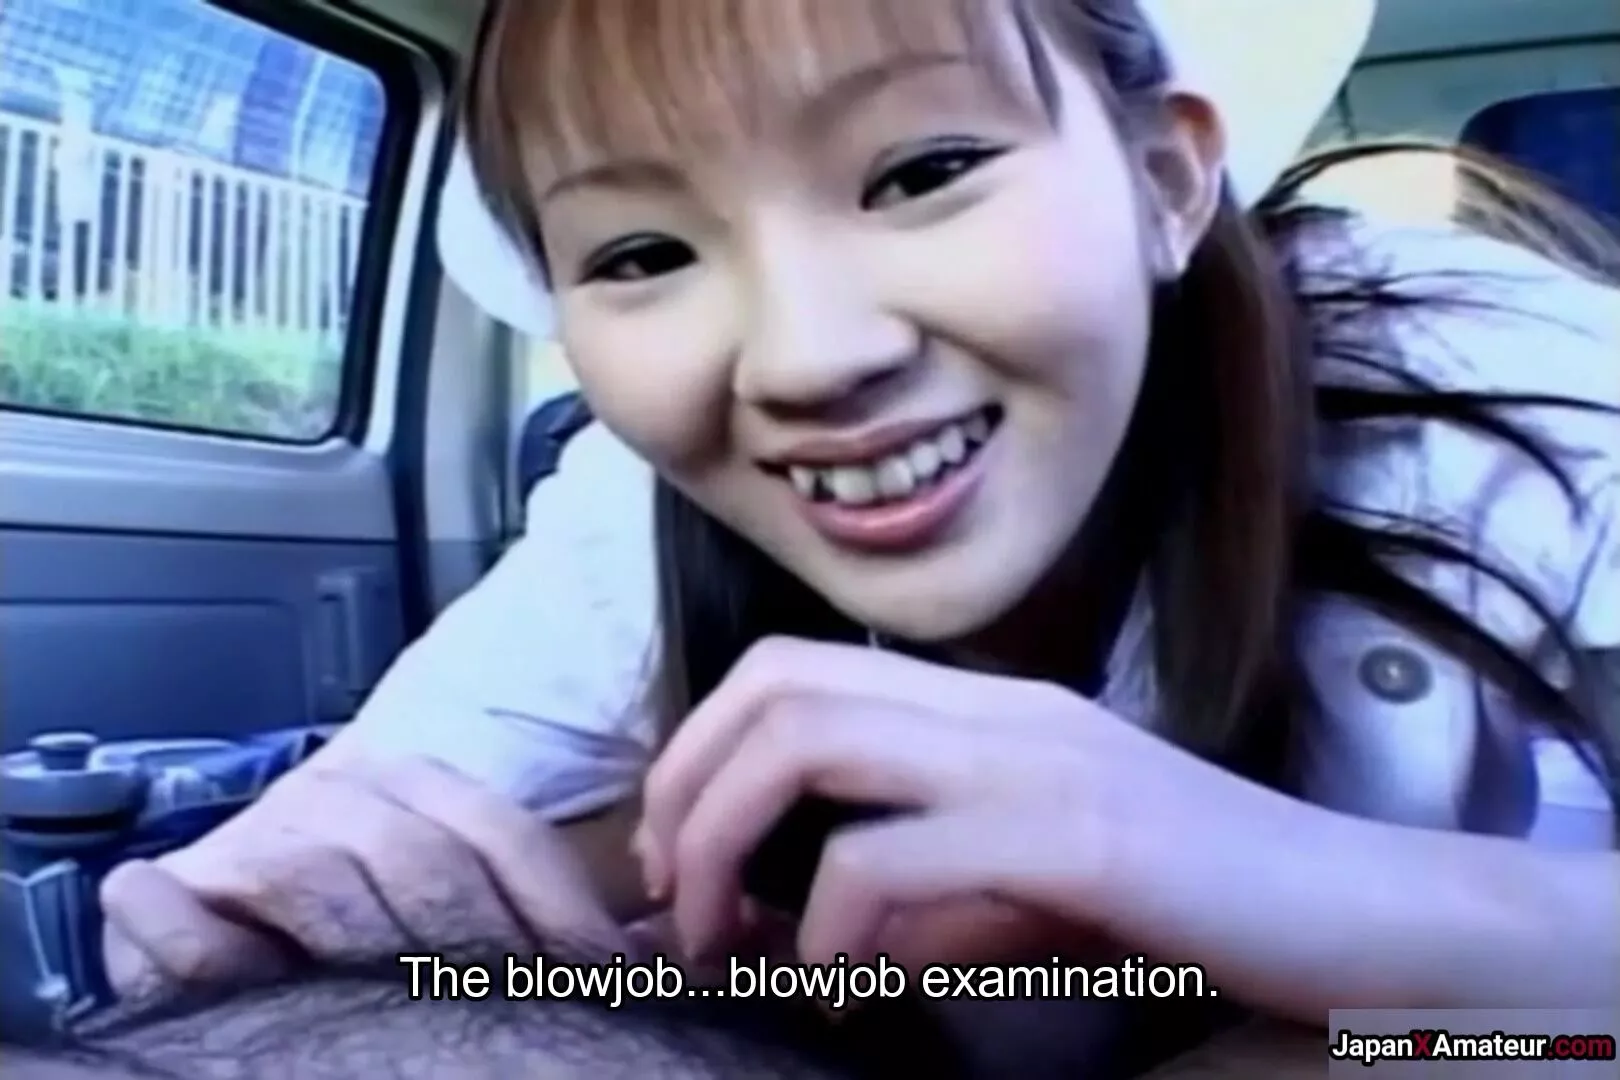 Japanese Nurse Giving A Blowjob Examination In A